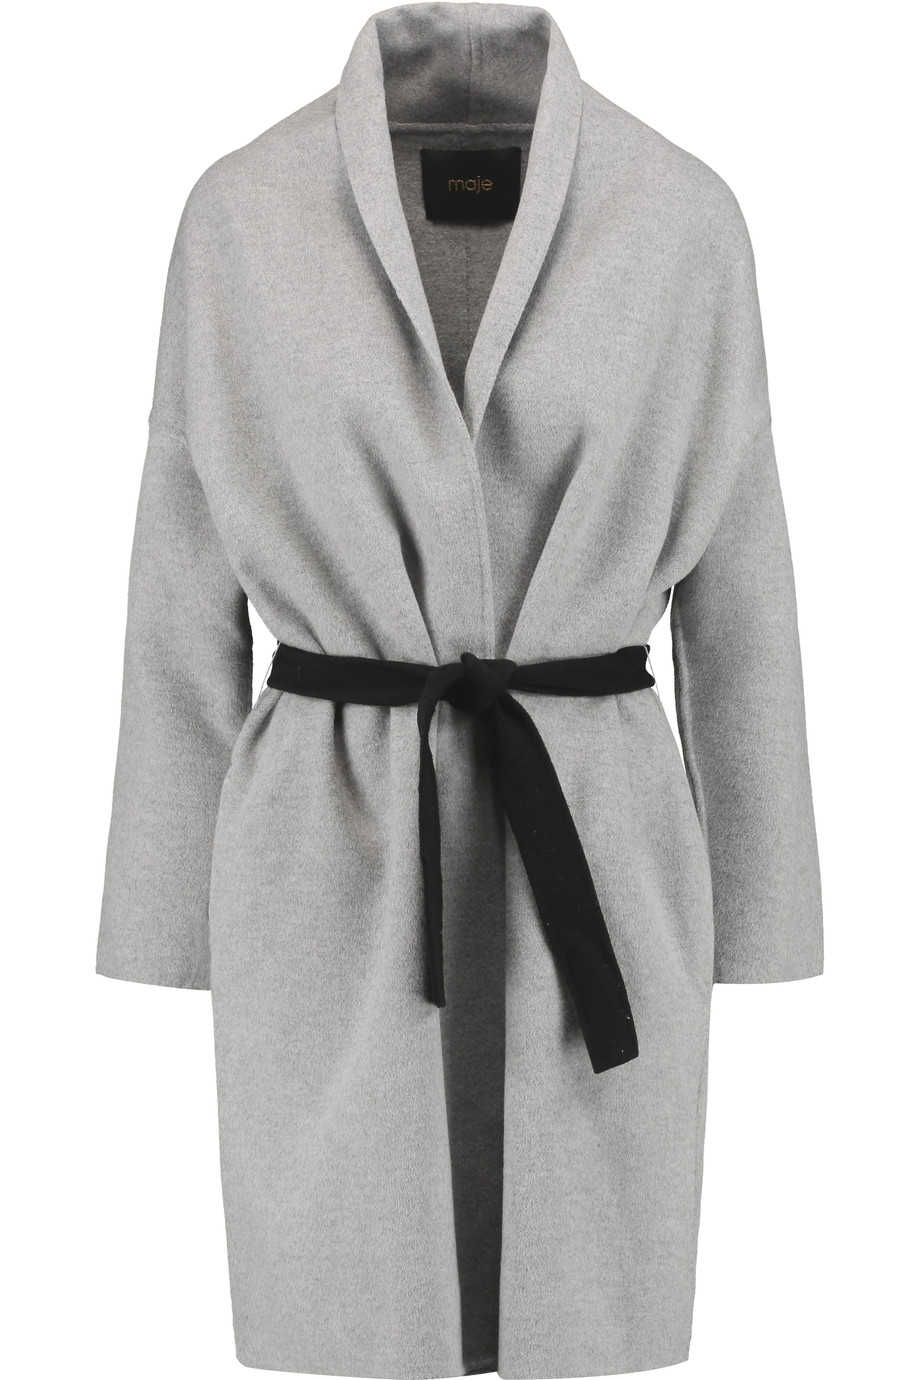 Maje Wool-blend Coat | ModeSens